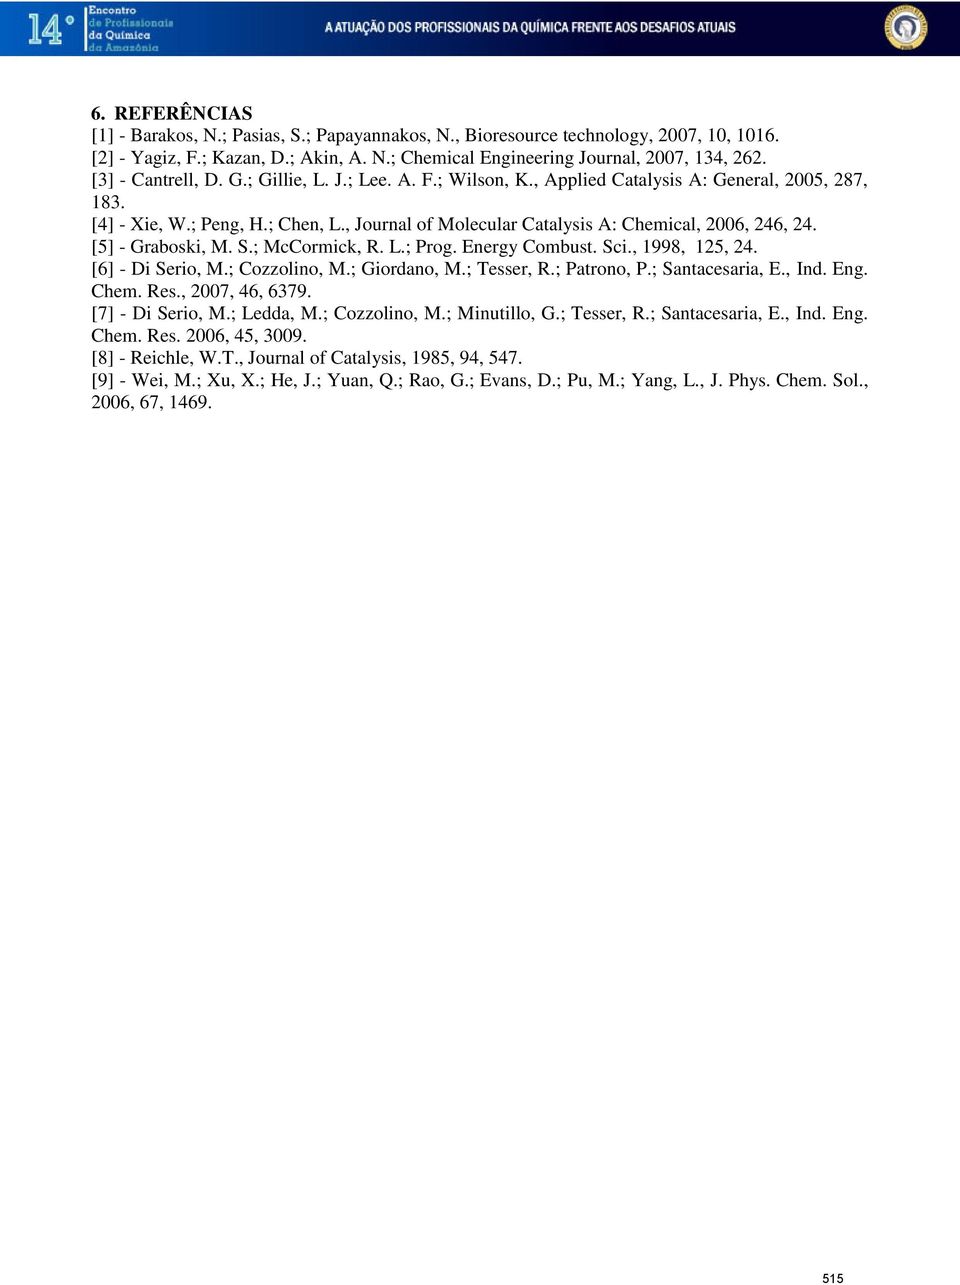 , Journal of Molecular Catalysis A: Chemical, 2006, 246, 24. [5] - Graboski, M. S.; McCormick, R. L.; Prog. Energy Combust. Sci., 1998, 125, 24. [6] - Di Serio, M.; Cozzolino, M.; Giordano, M.